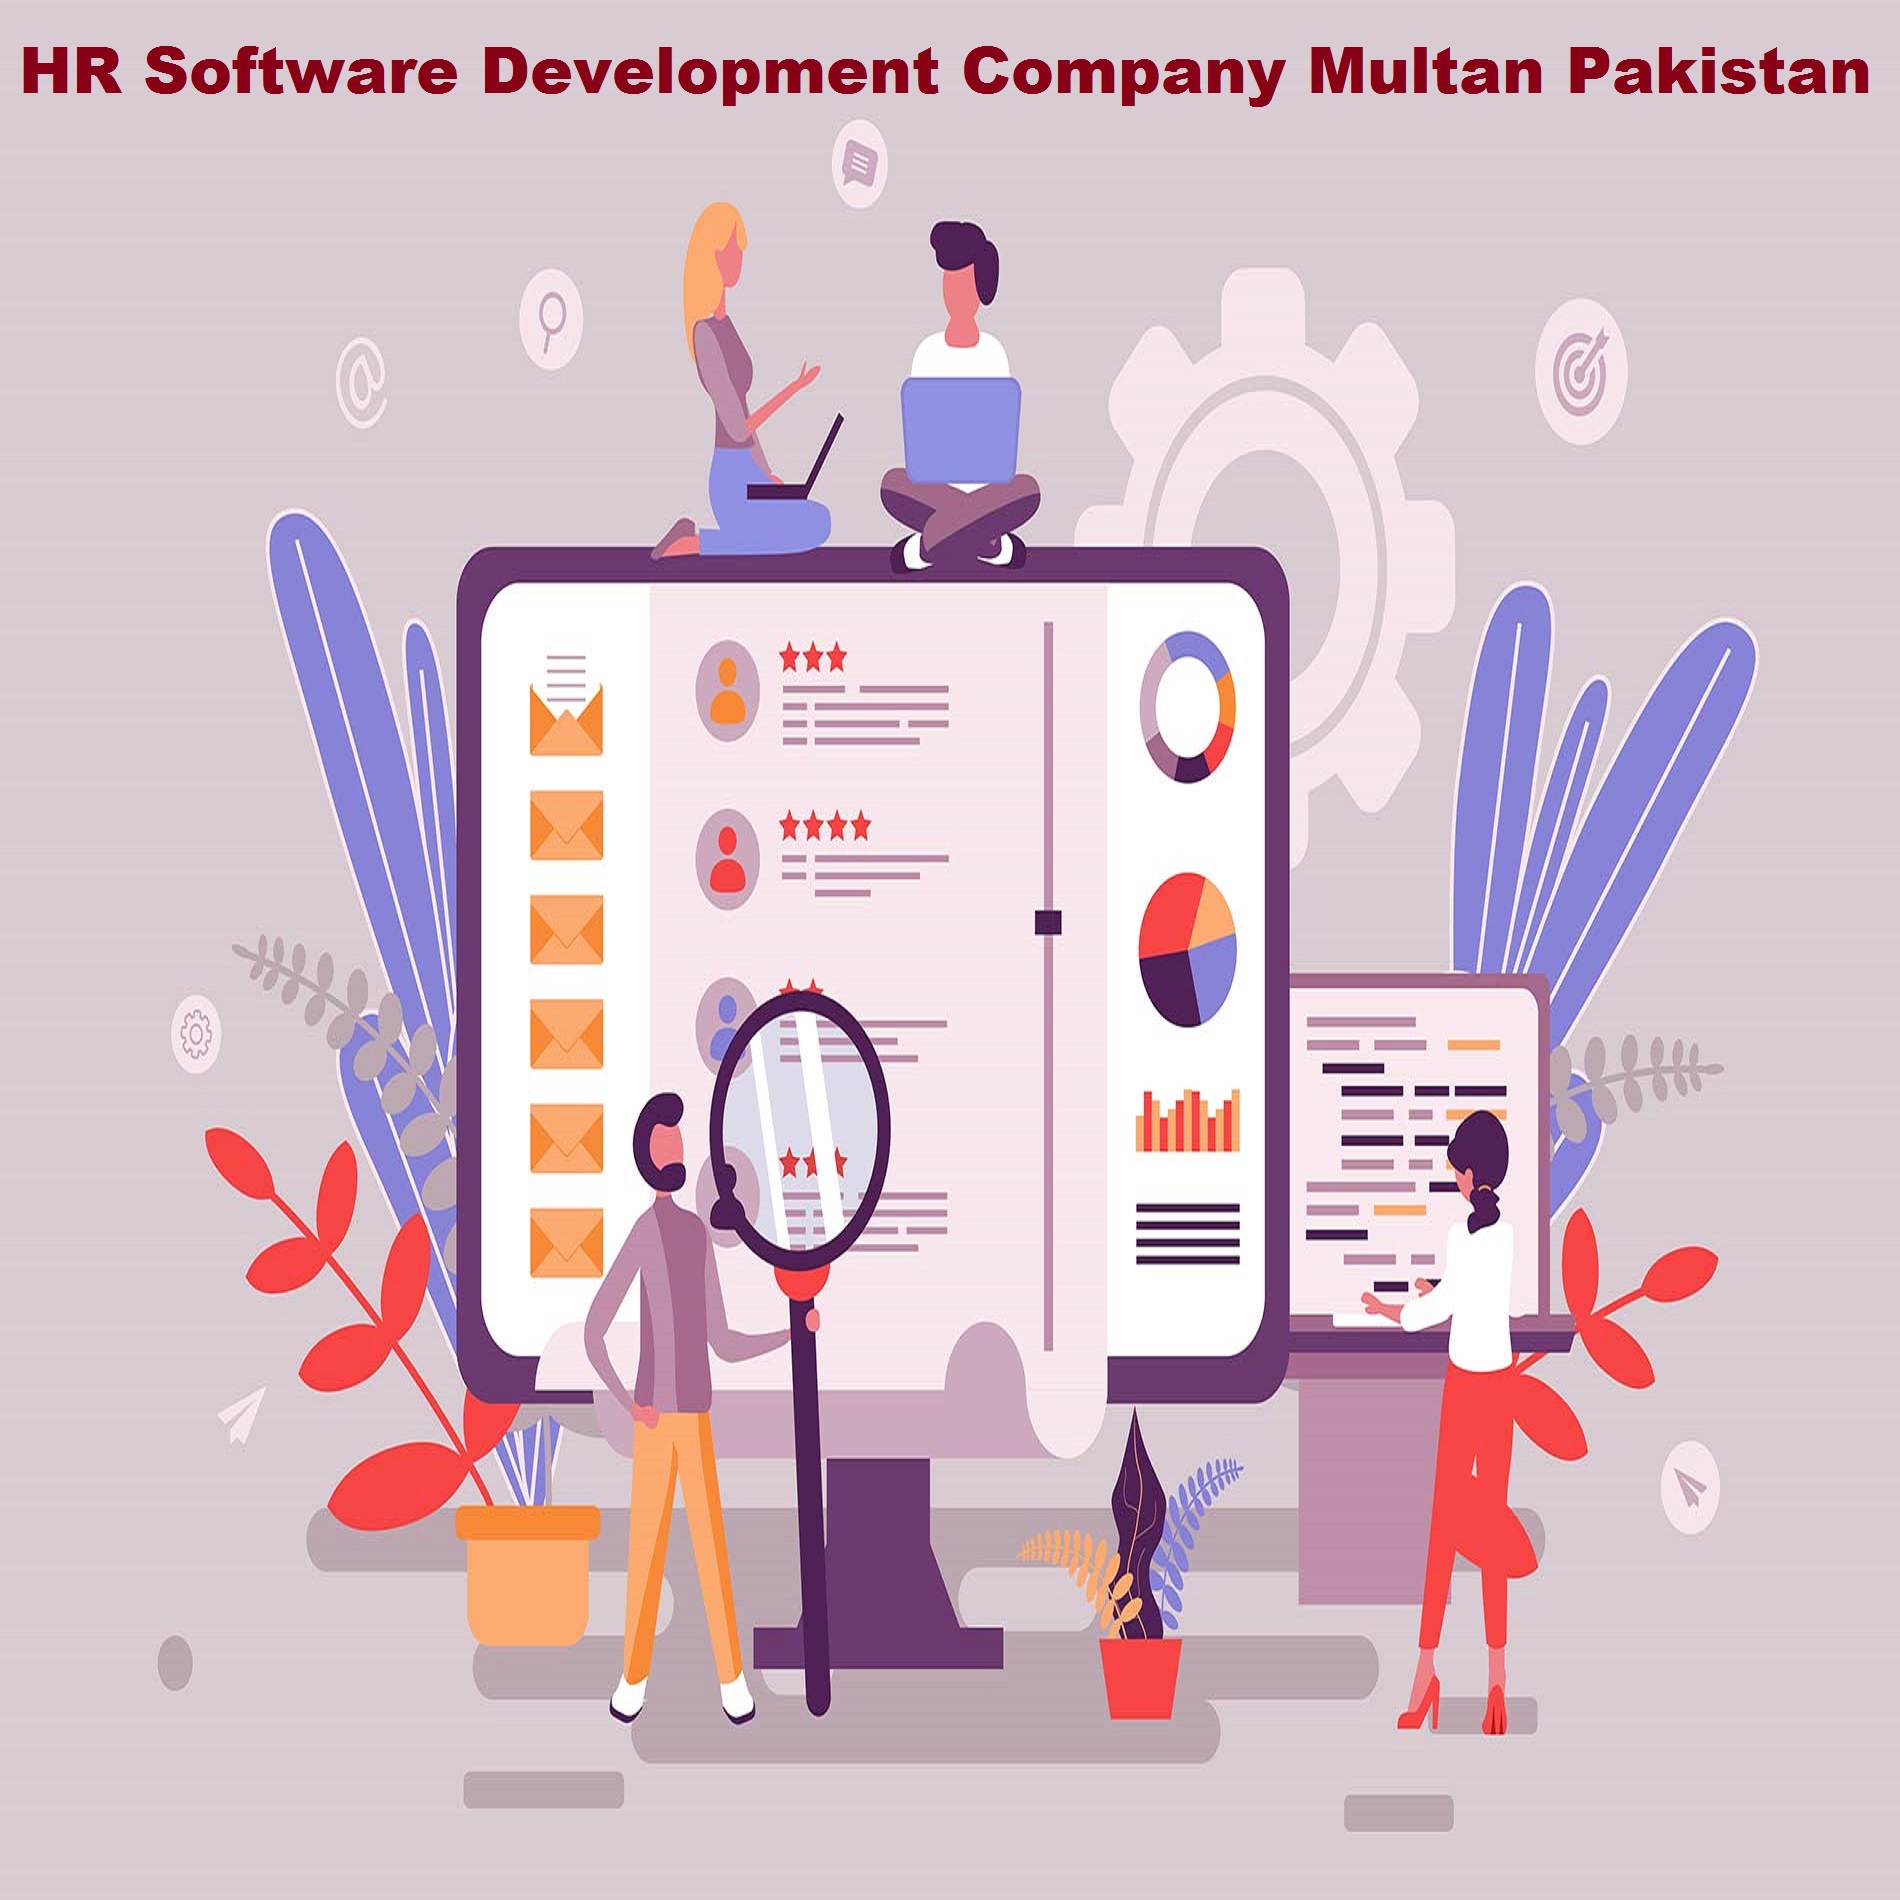 HR Software Development Company Multan Pakistan